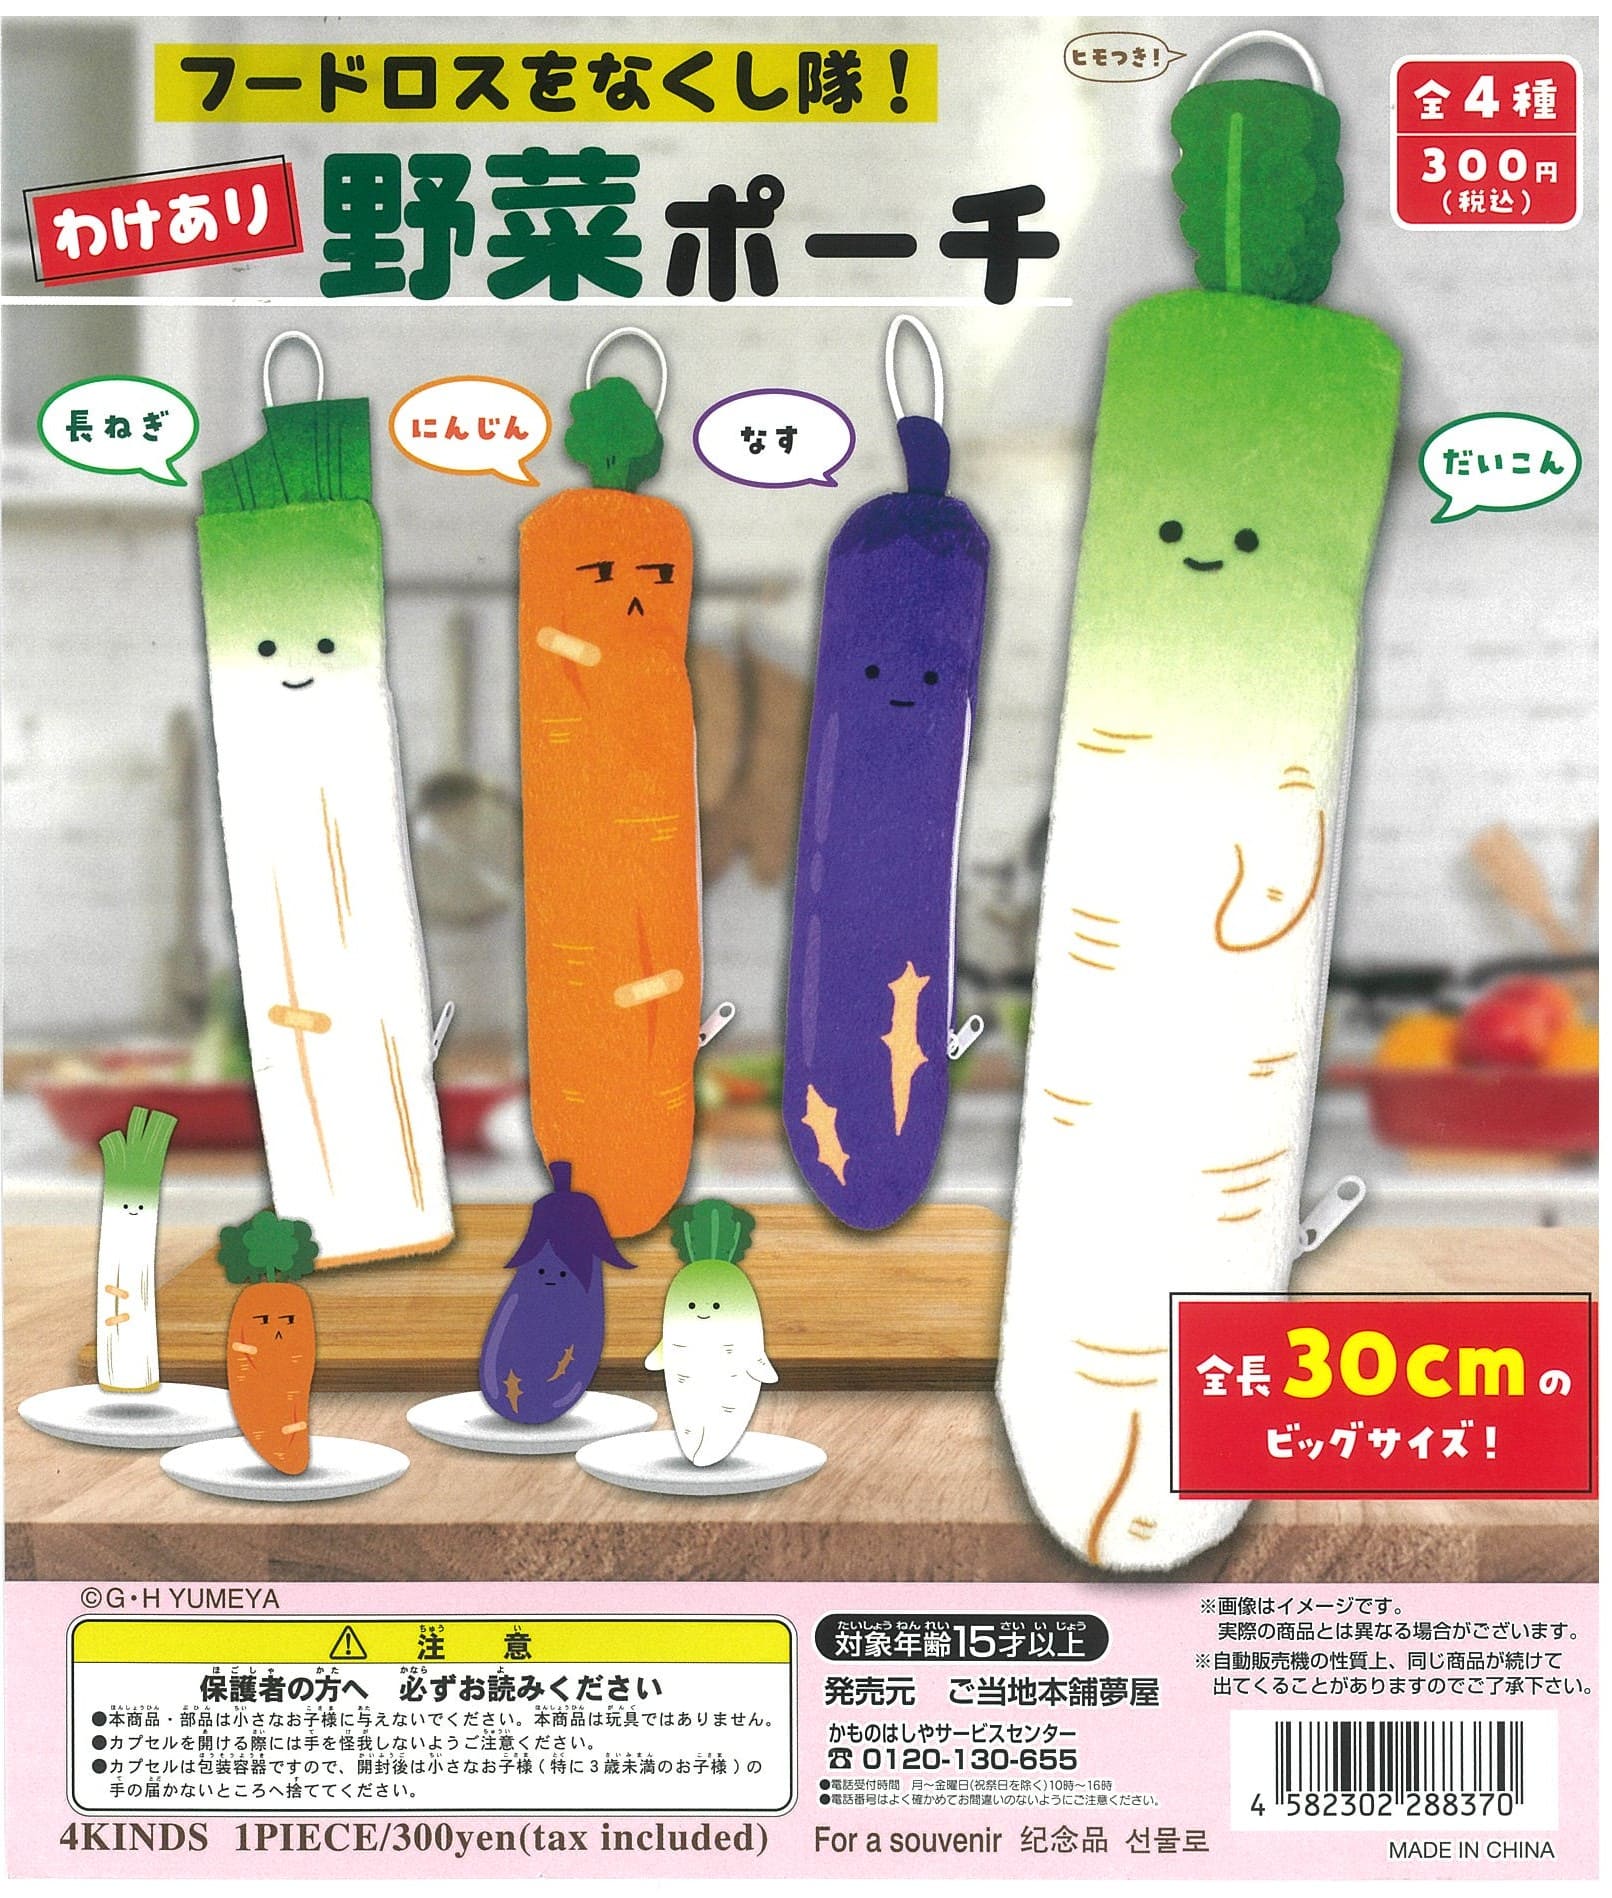 Yumeya CP2157 Wakeari Vegetable Pouch